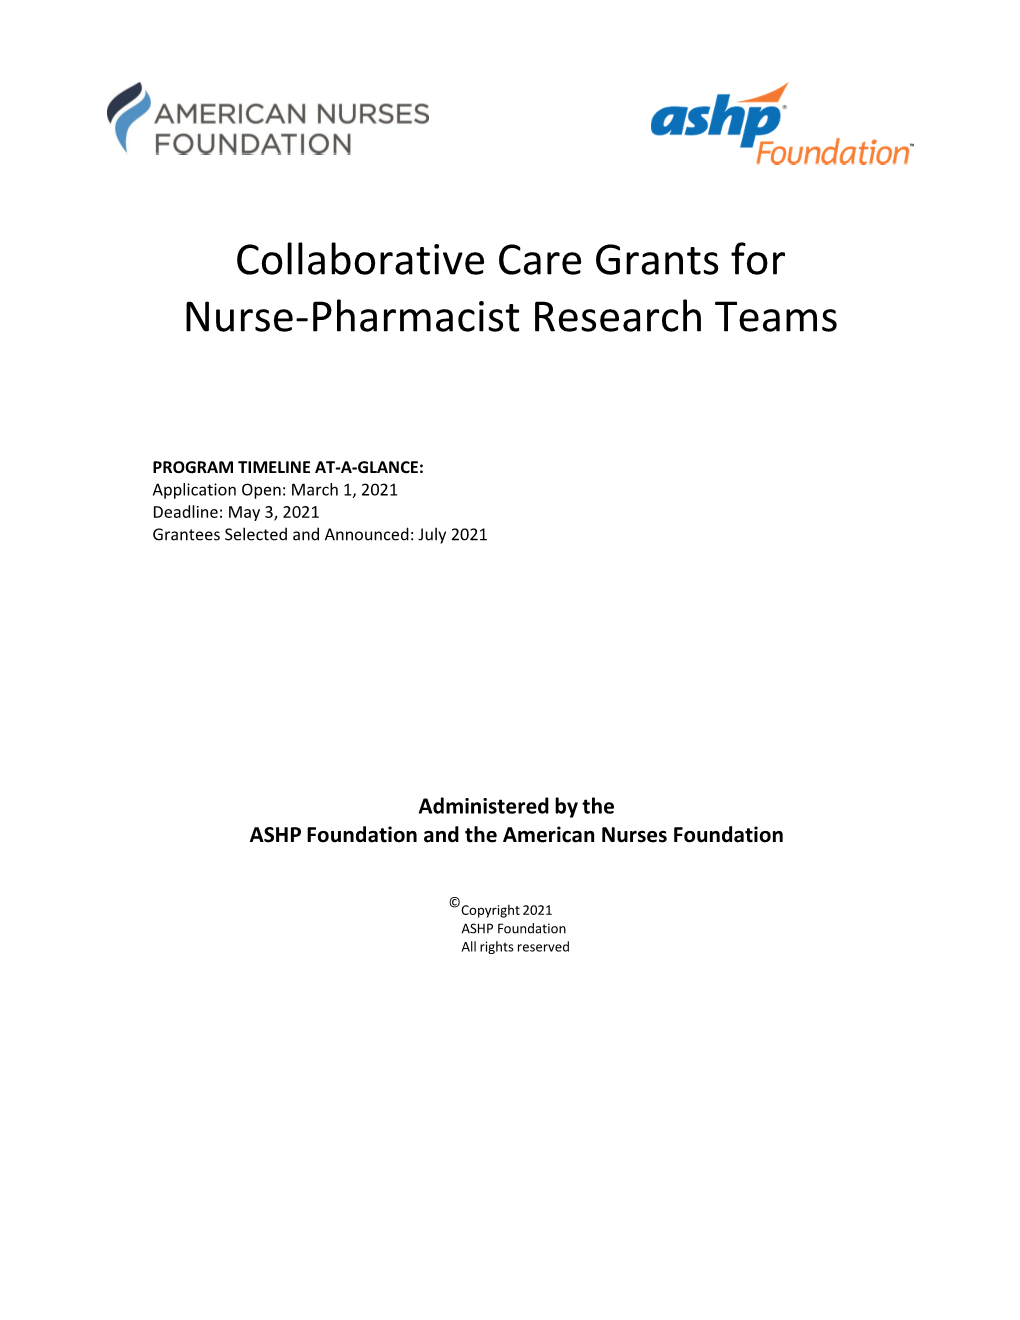 Collaborative Care Grants for Nurse-Pharmacist Research Teams